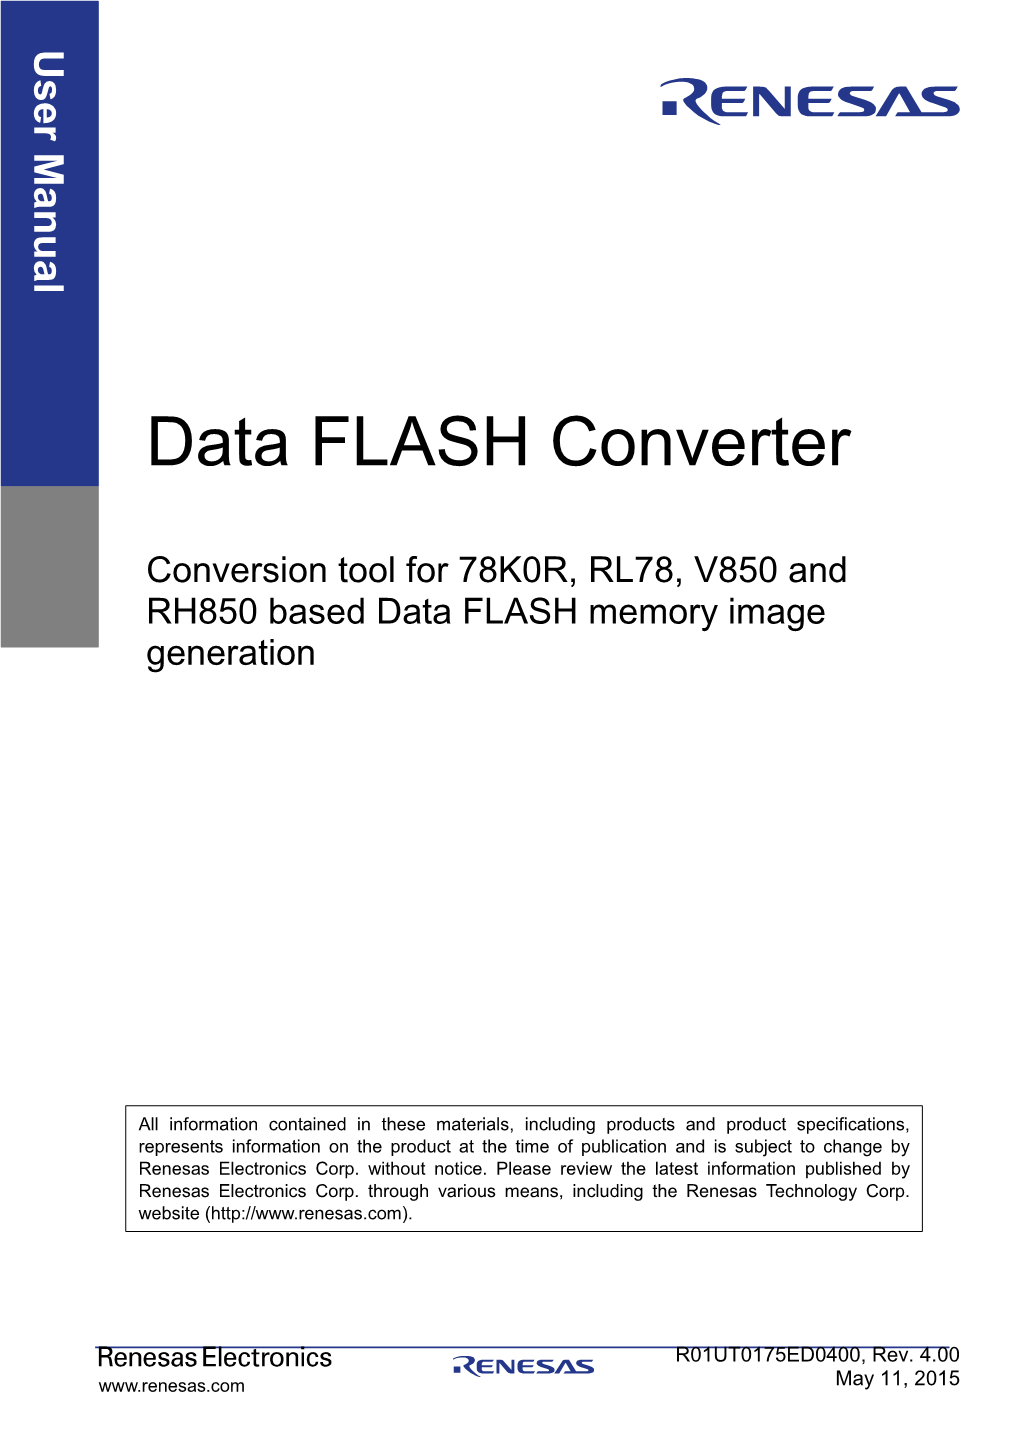 User's Manual: Data Flash Converter